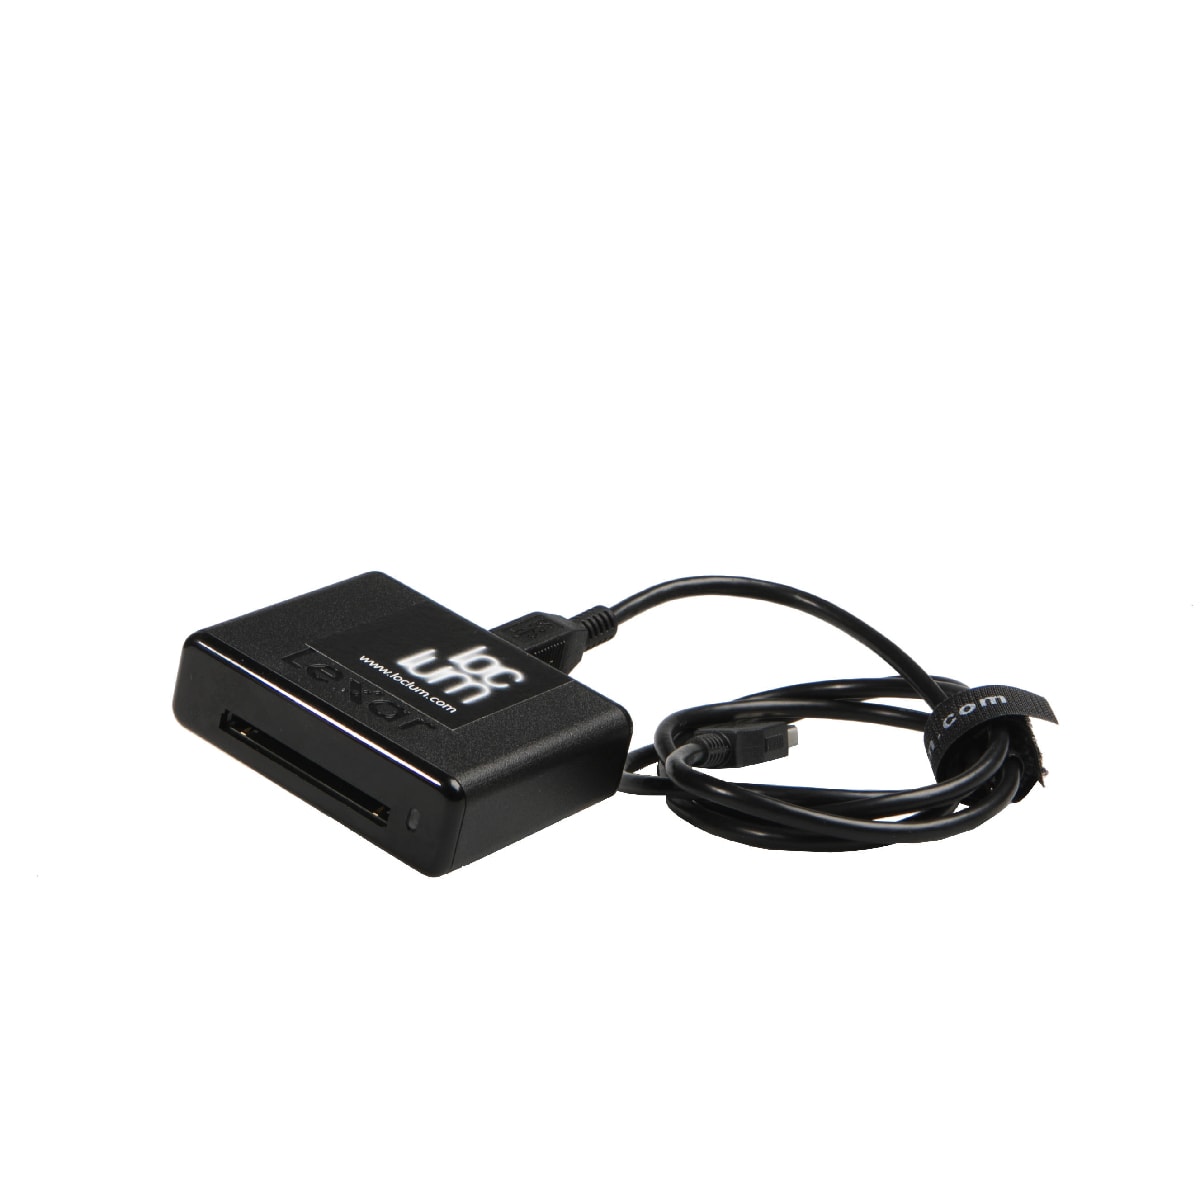 Lexar Card Reader, CFast, USB 3.0